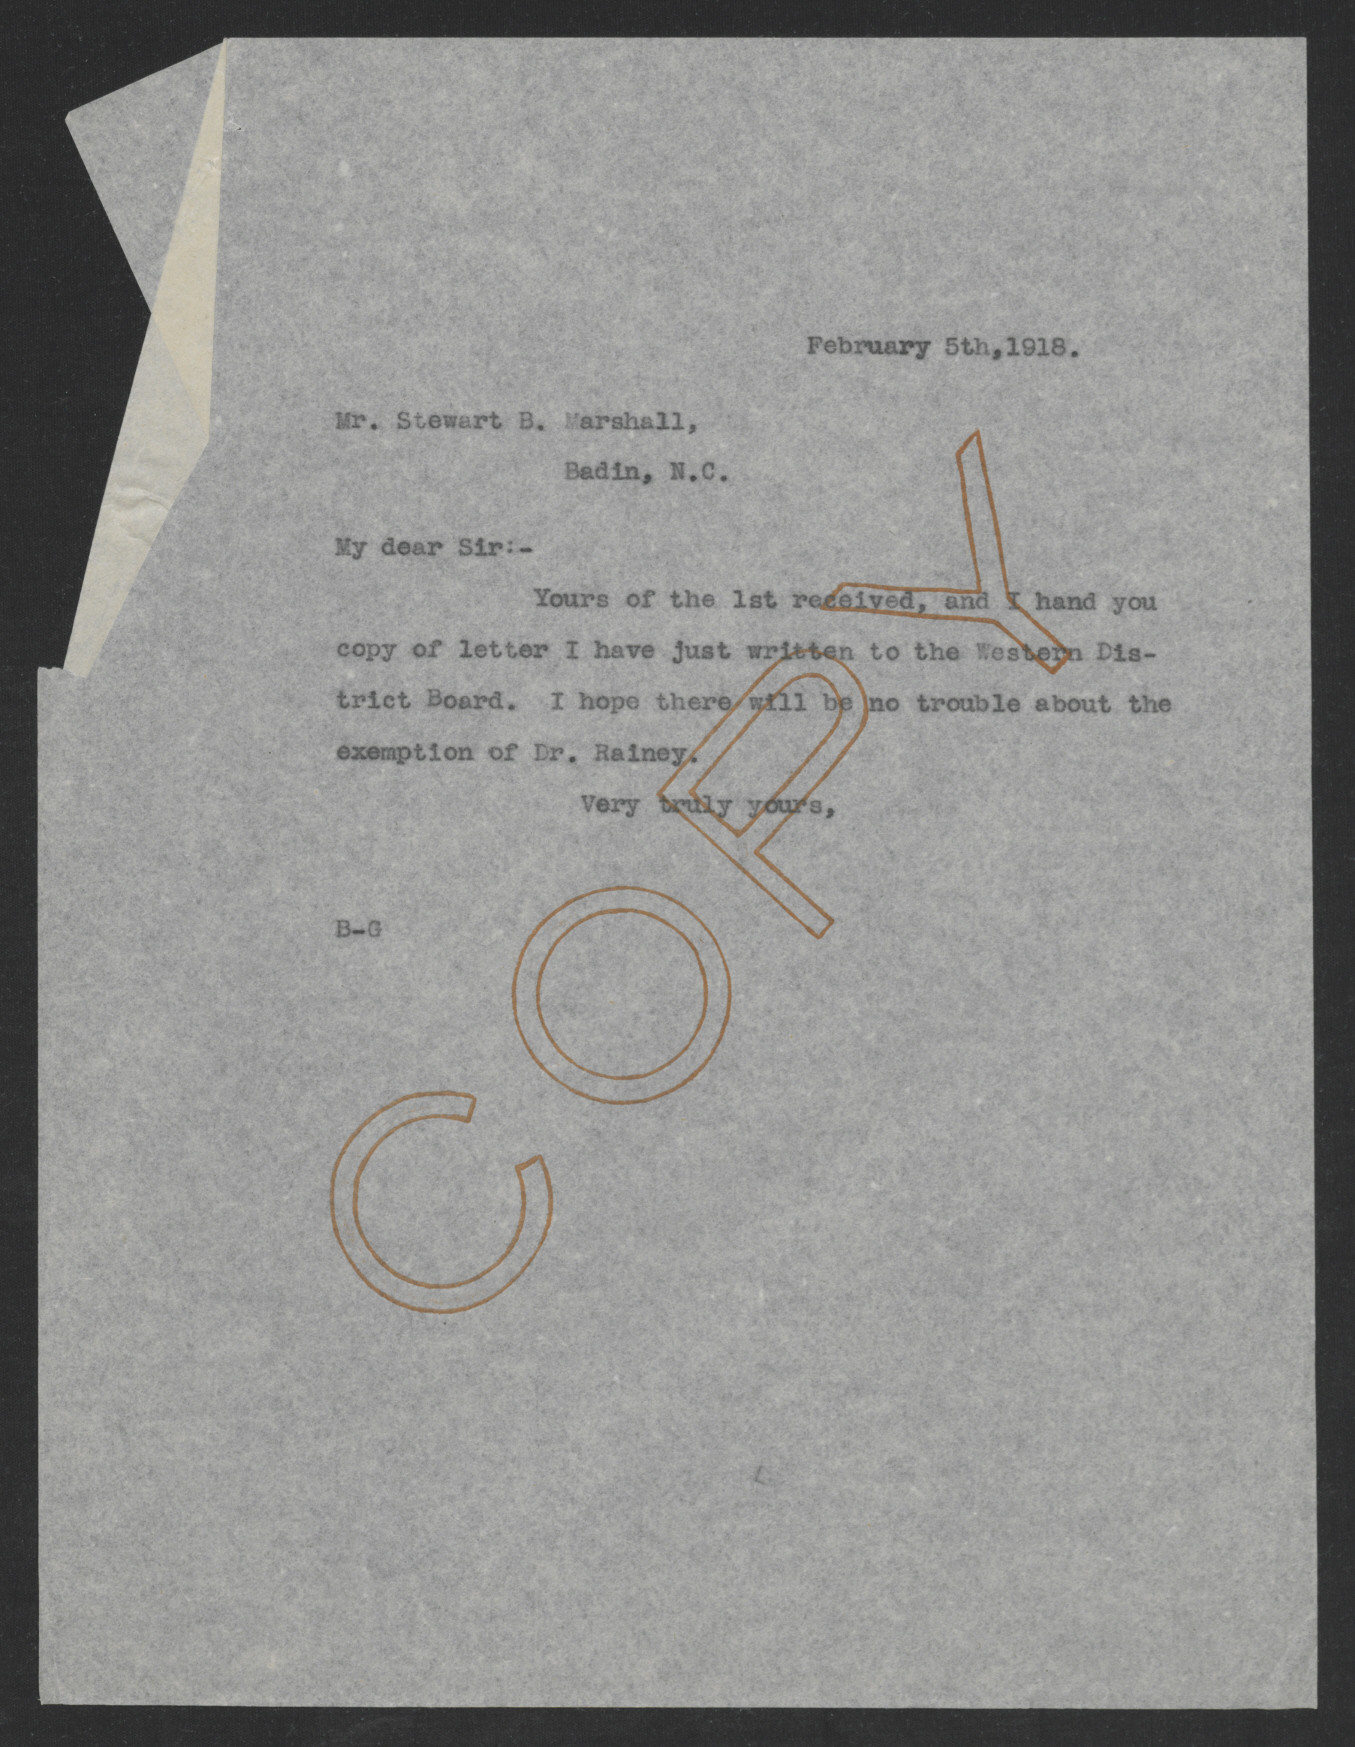 Letter from Thomas W. Bickett to Stuart B. Marshall, February 5, 1918